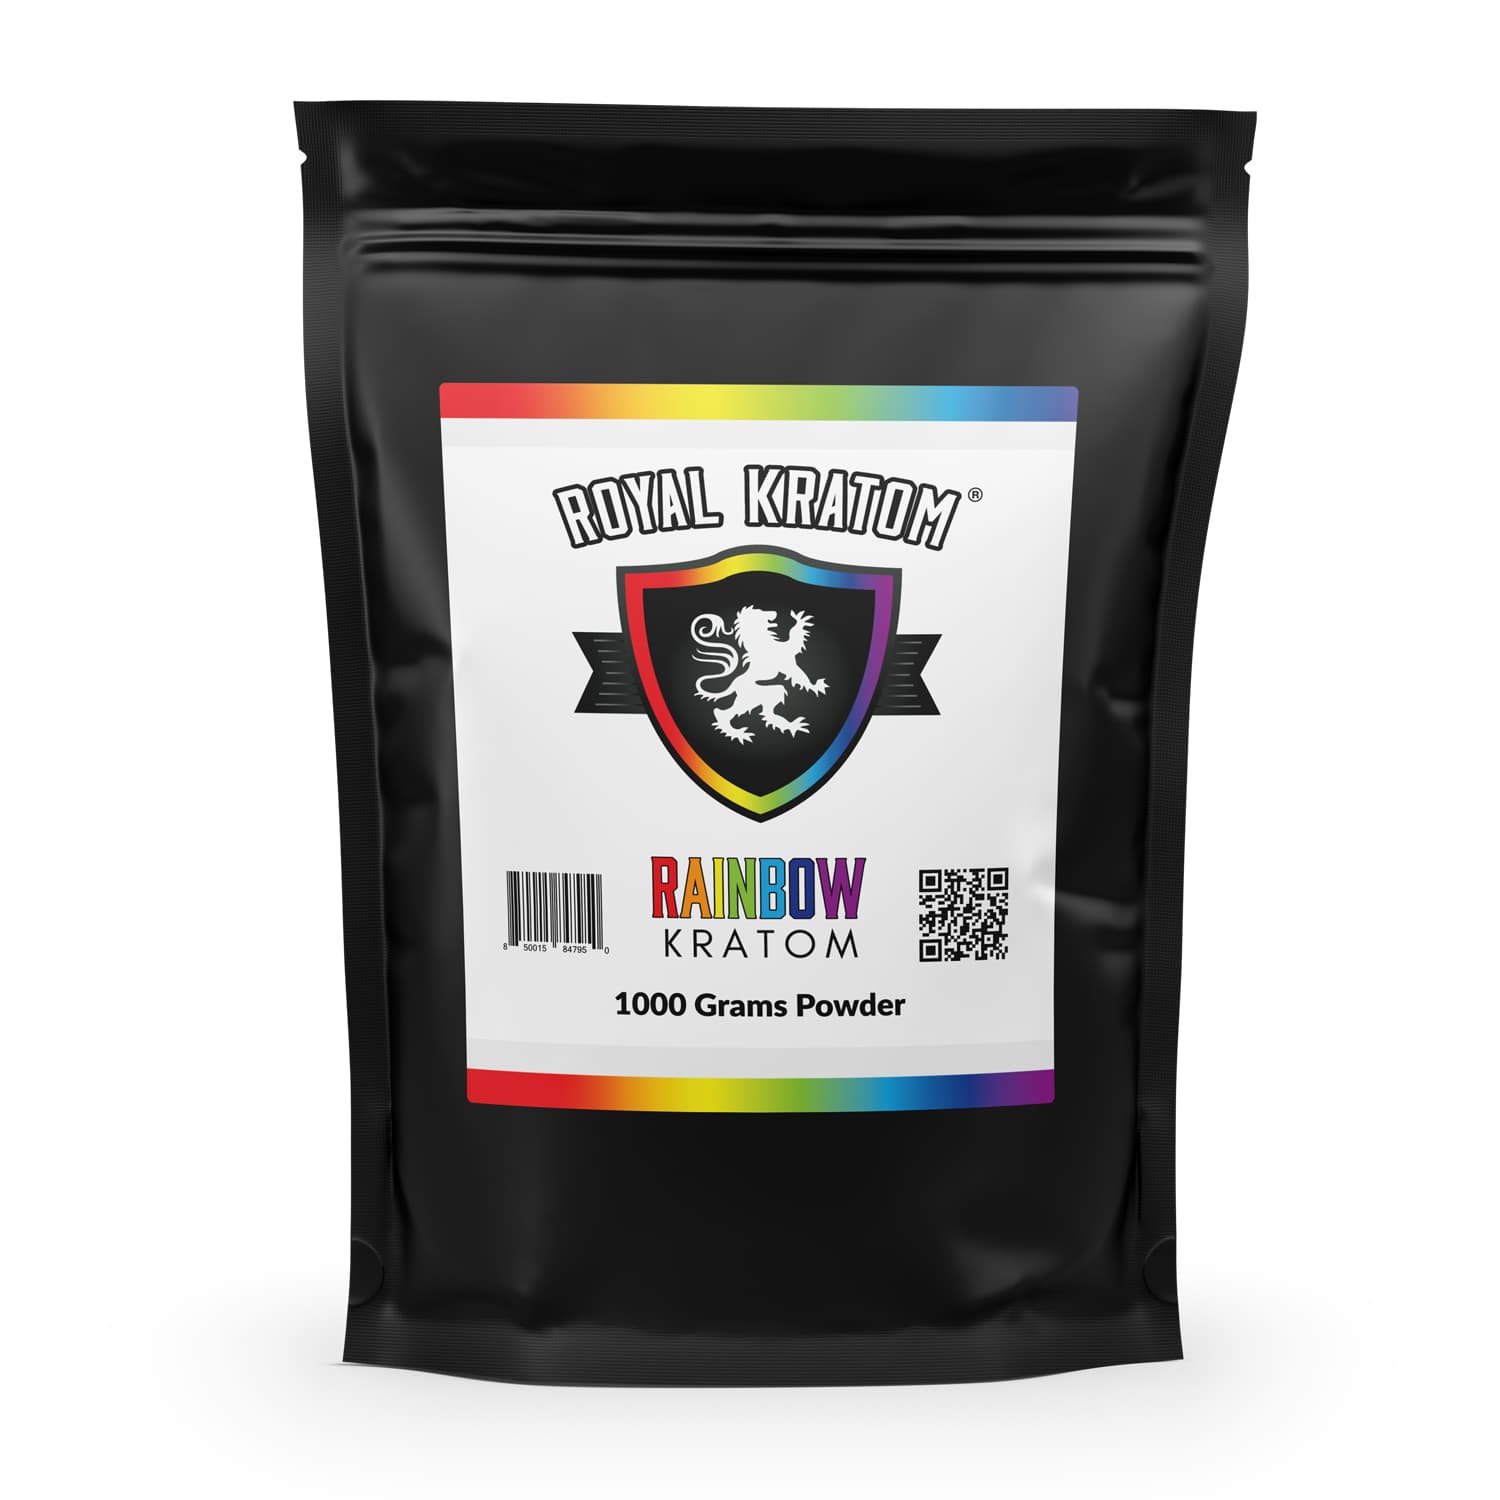 Royal Kratom Rainbow Kratom Blend Powder 1000 Grams Kilo package